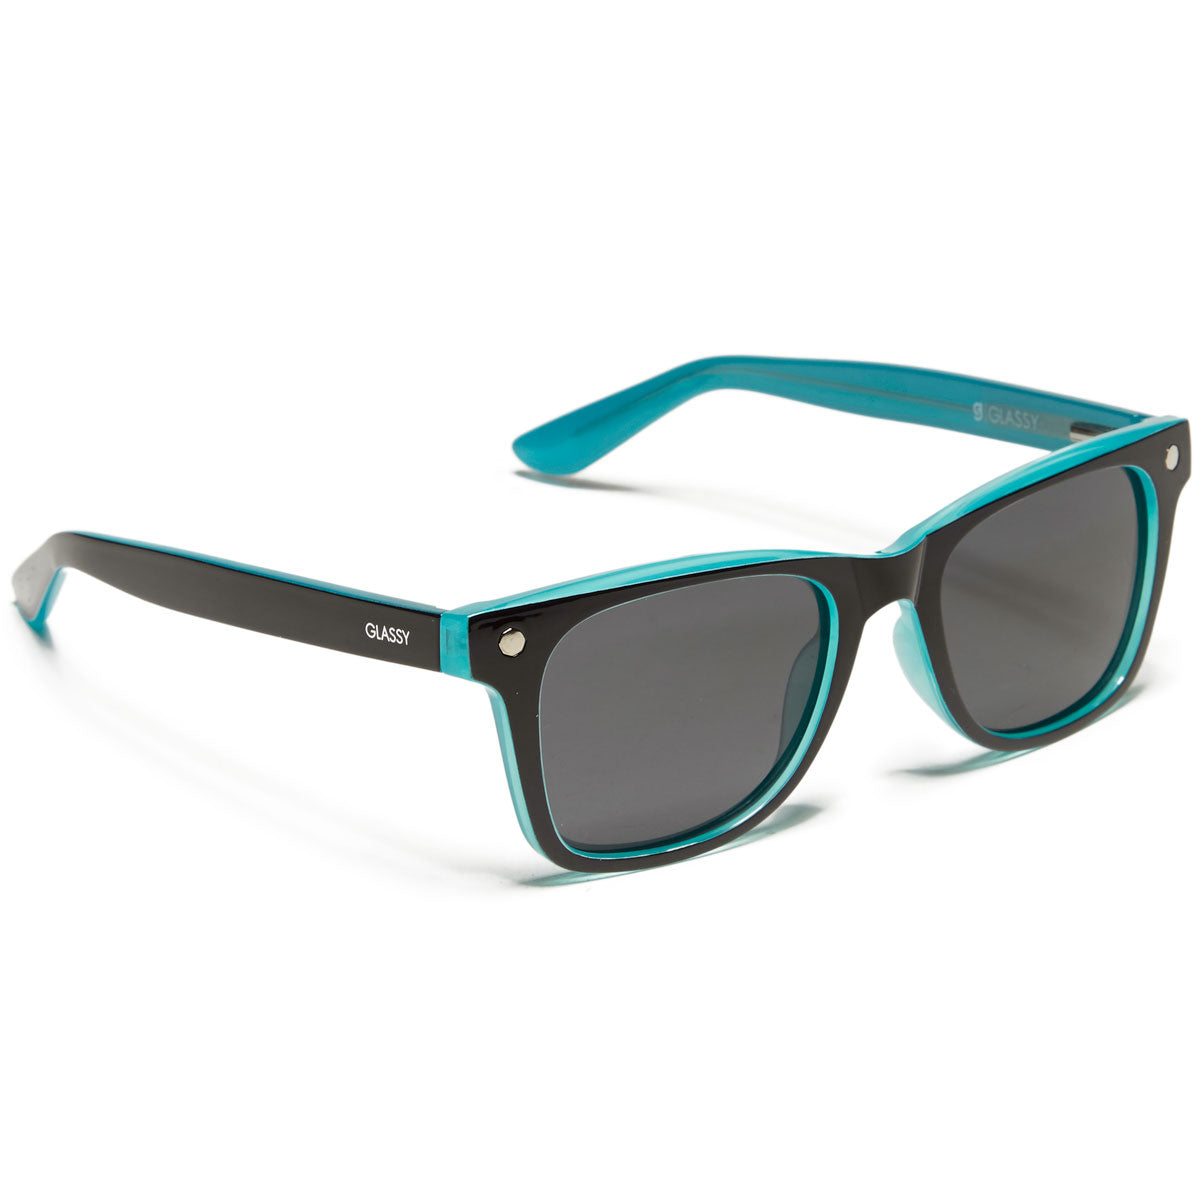 Glassy Harper Premium Polarized Sunglasses - Black Tiffany image 1